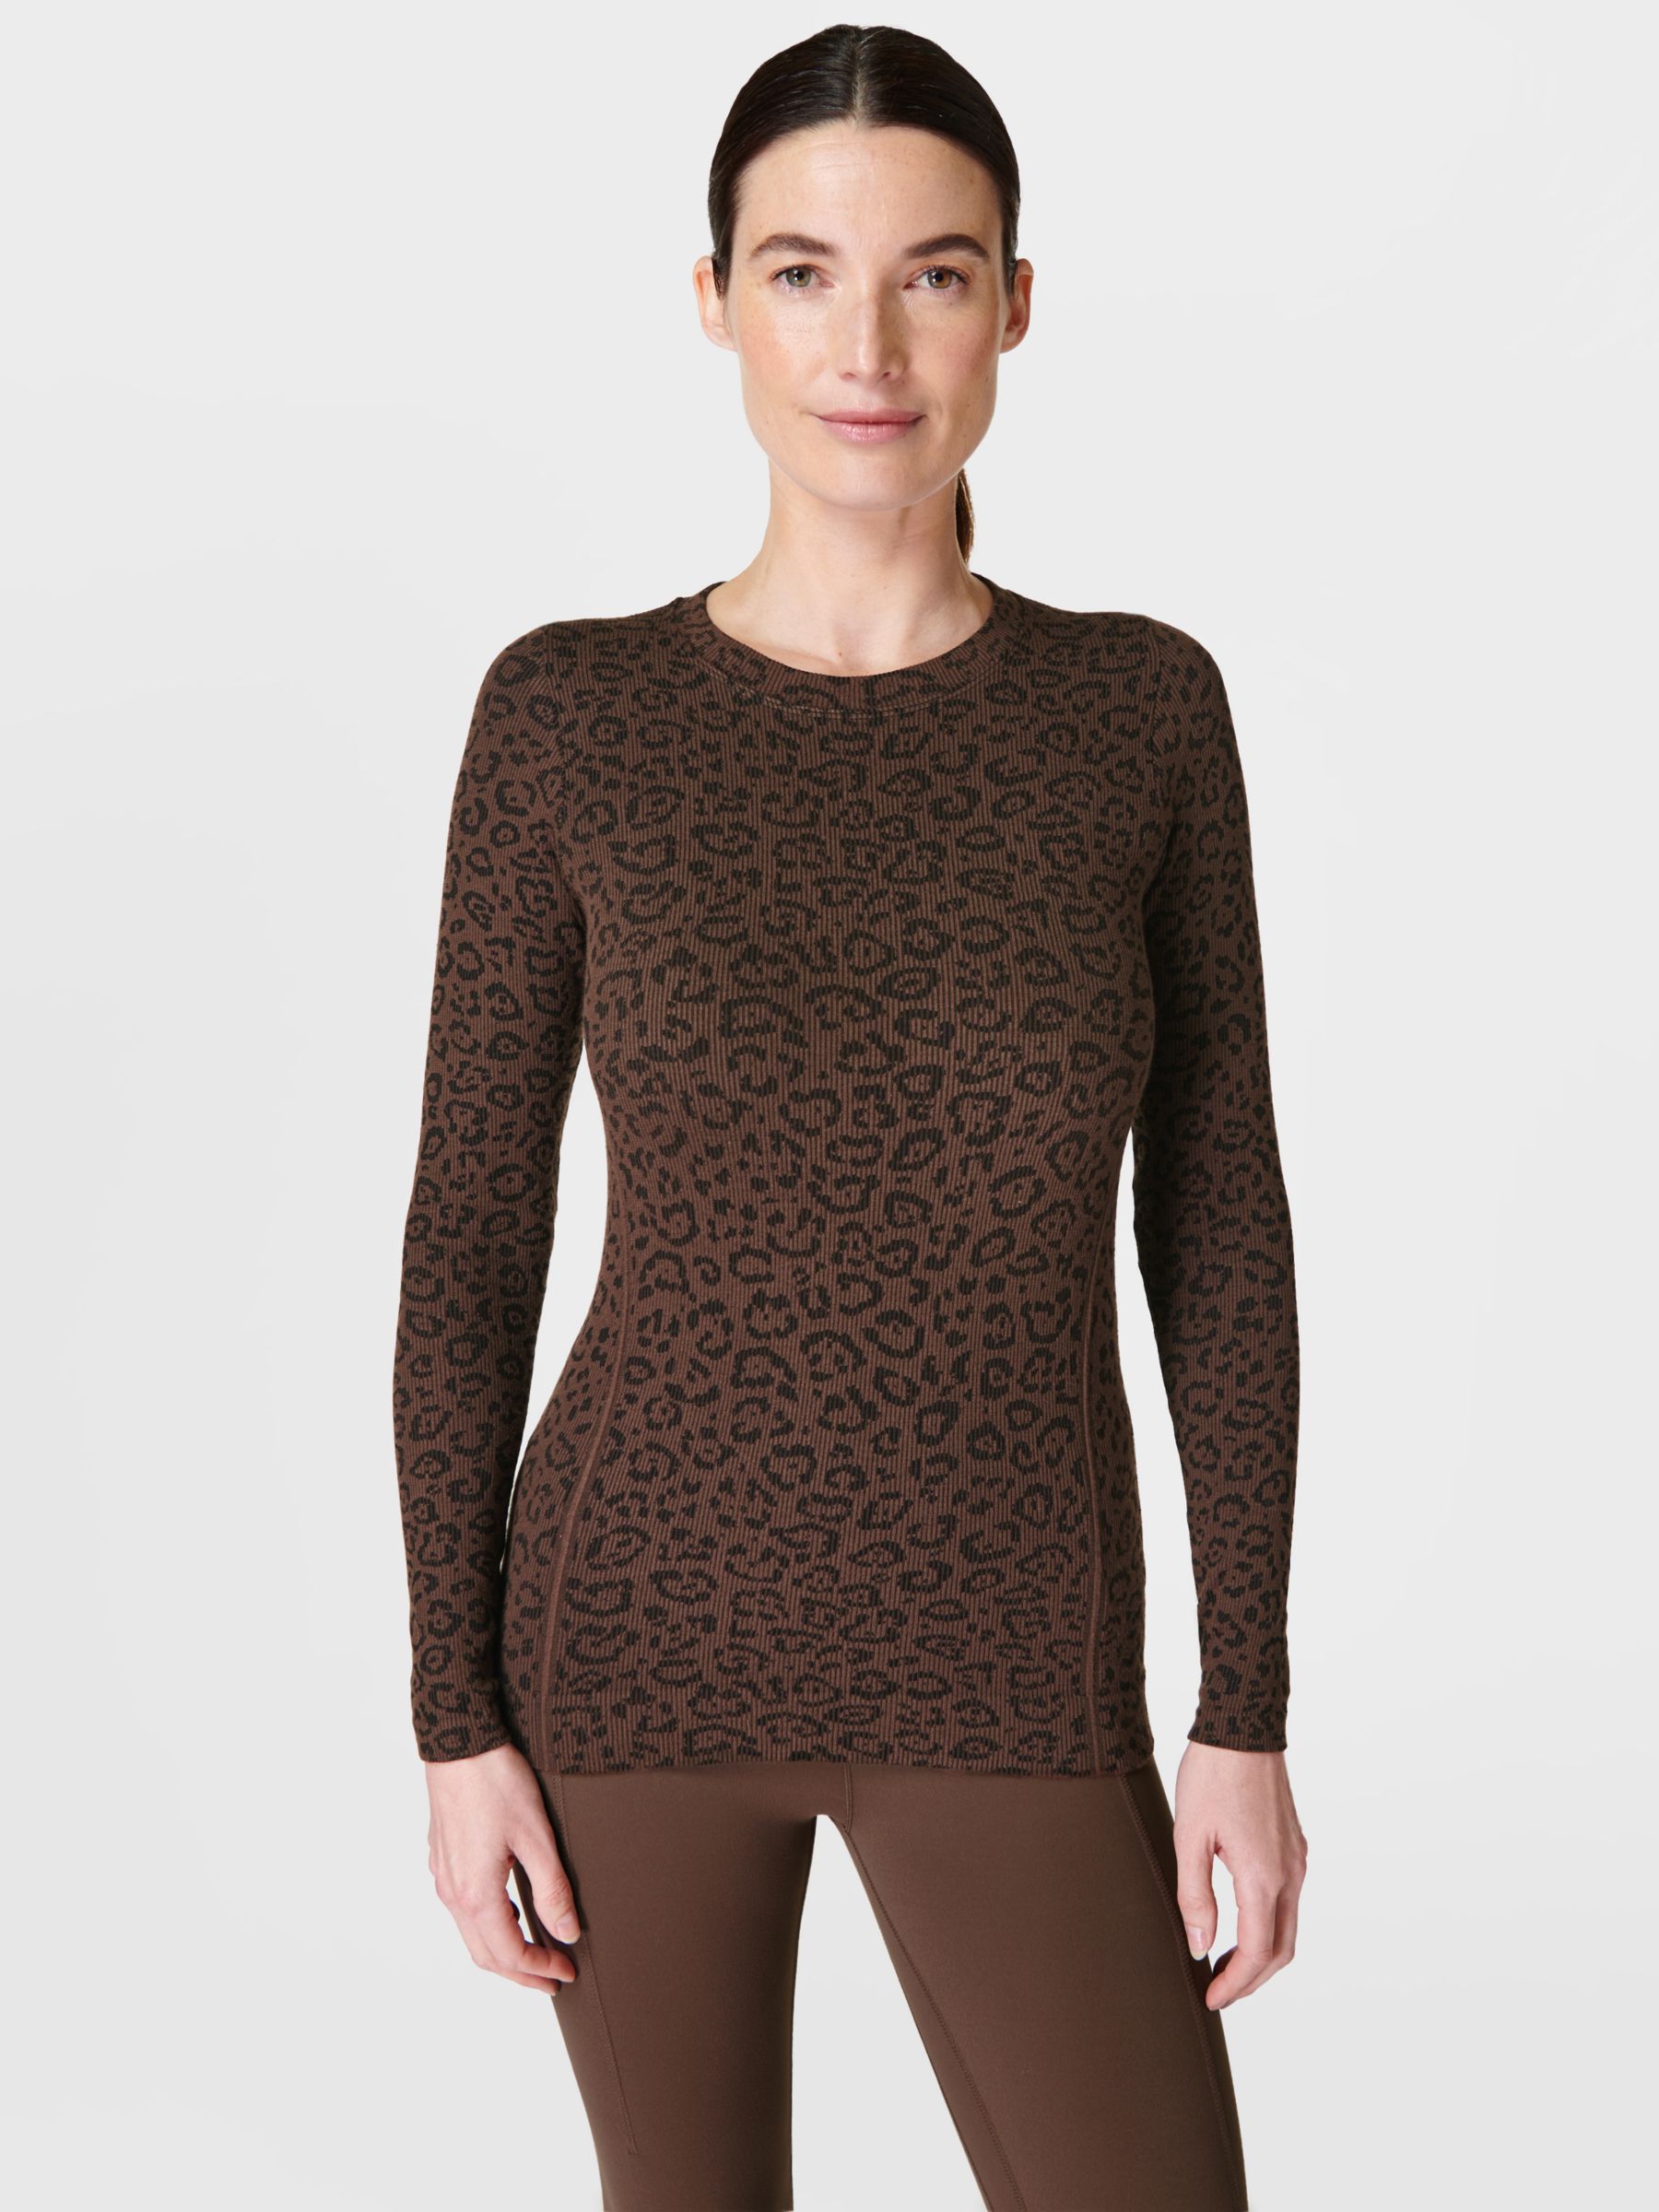 Super Soft 7/8 Yoga Leggings - Brown Leopard Markings Print